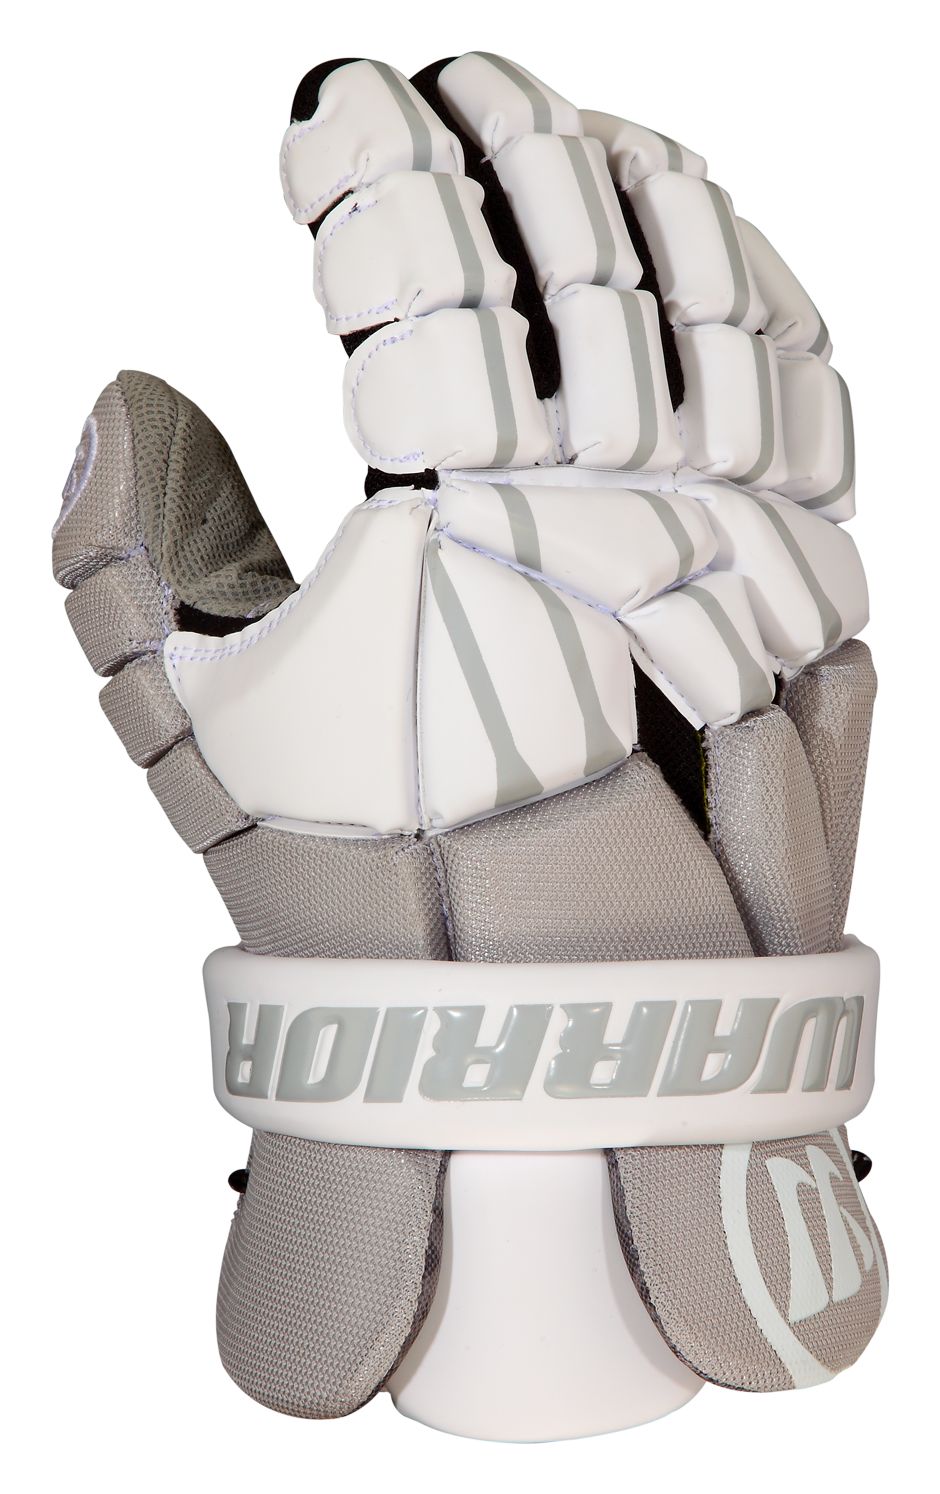 Regulator Light Lacrosse Glove , Grey with White image number 0